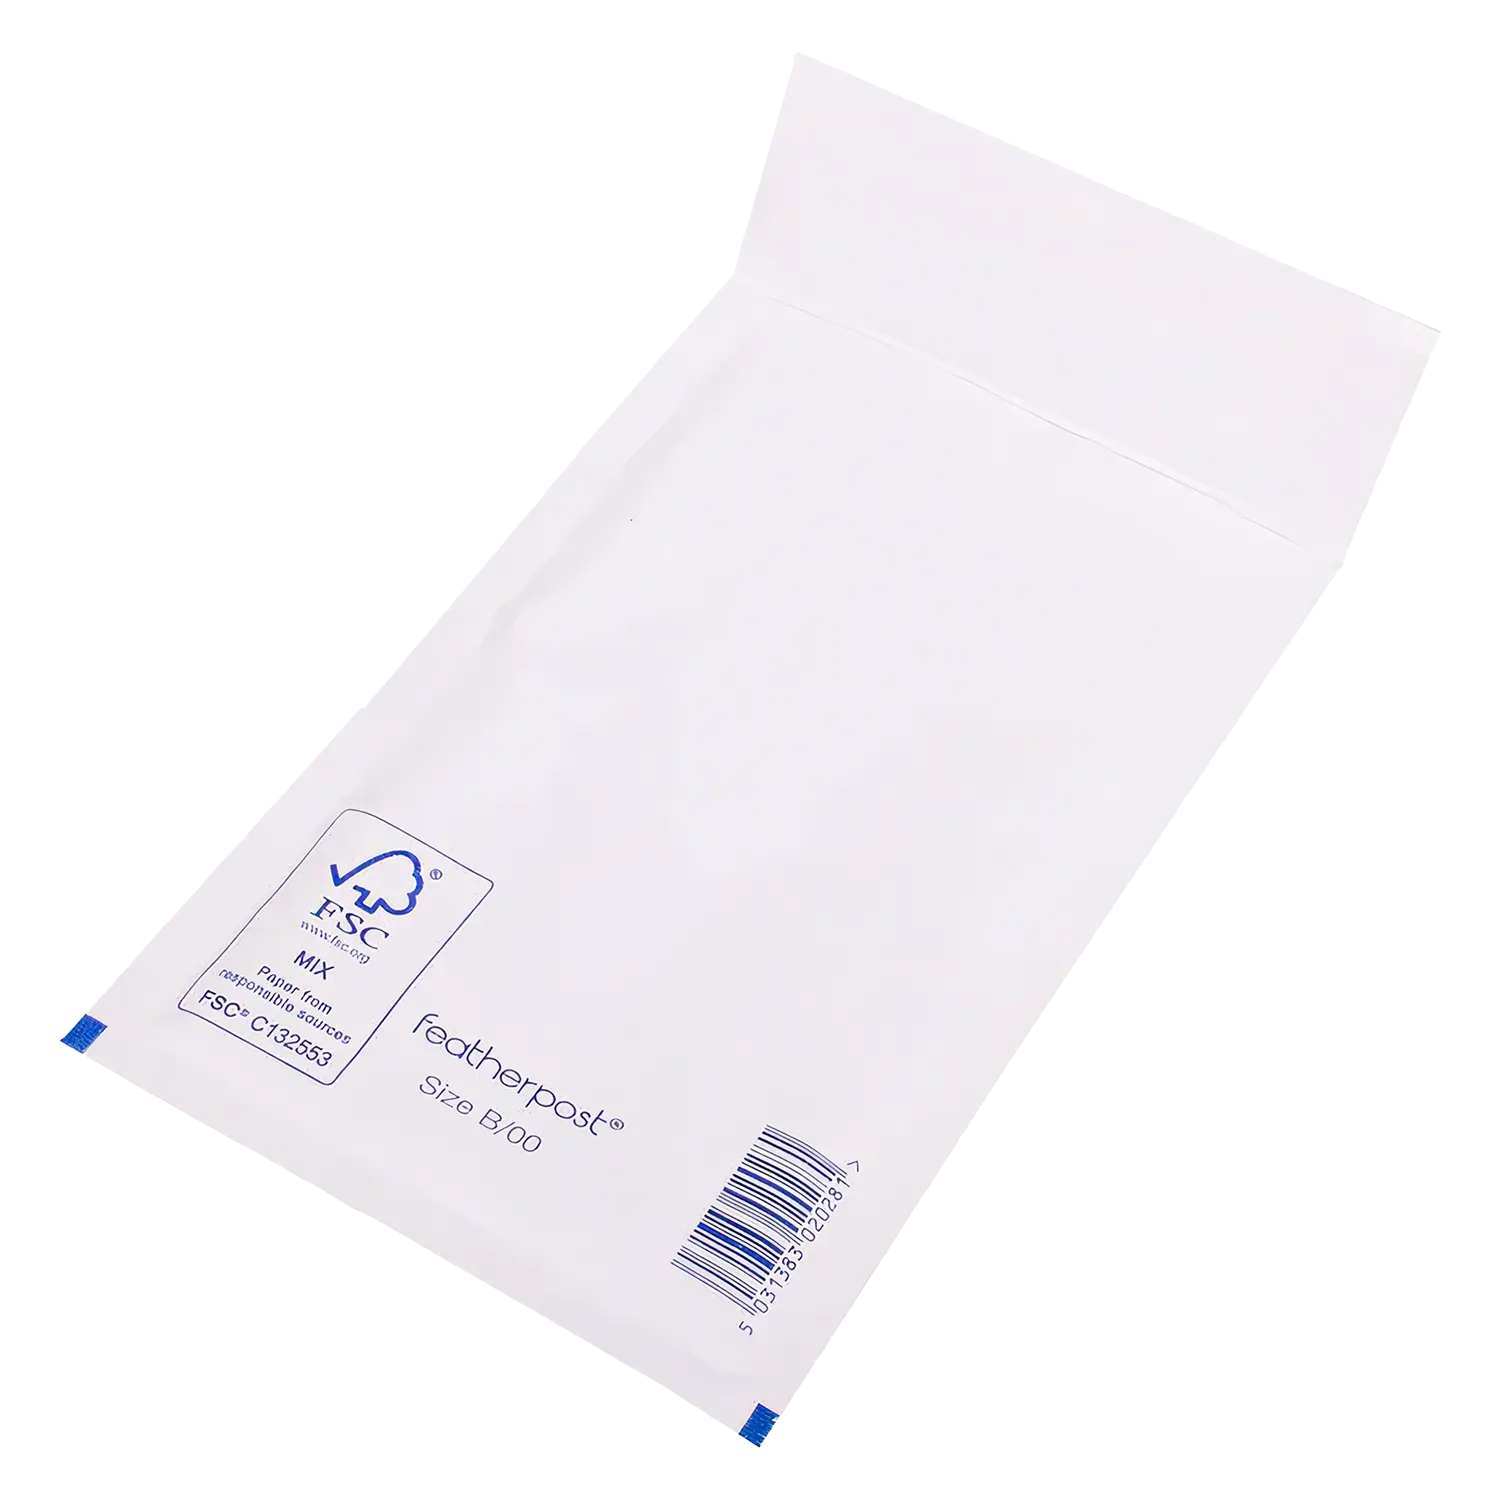 White Padded Bubble Envelopes Open- 150x215mm